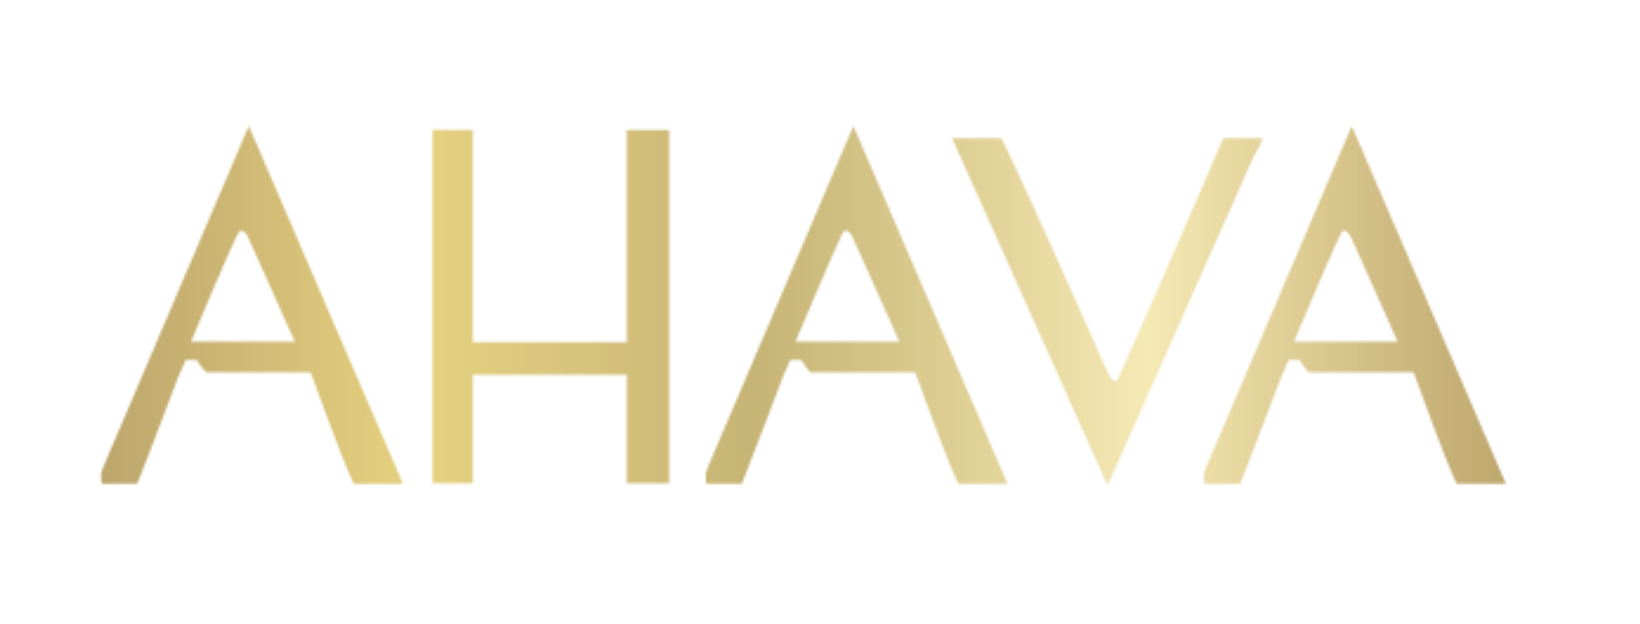 AHAVA USA logo